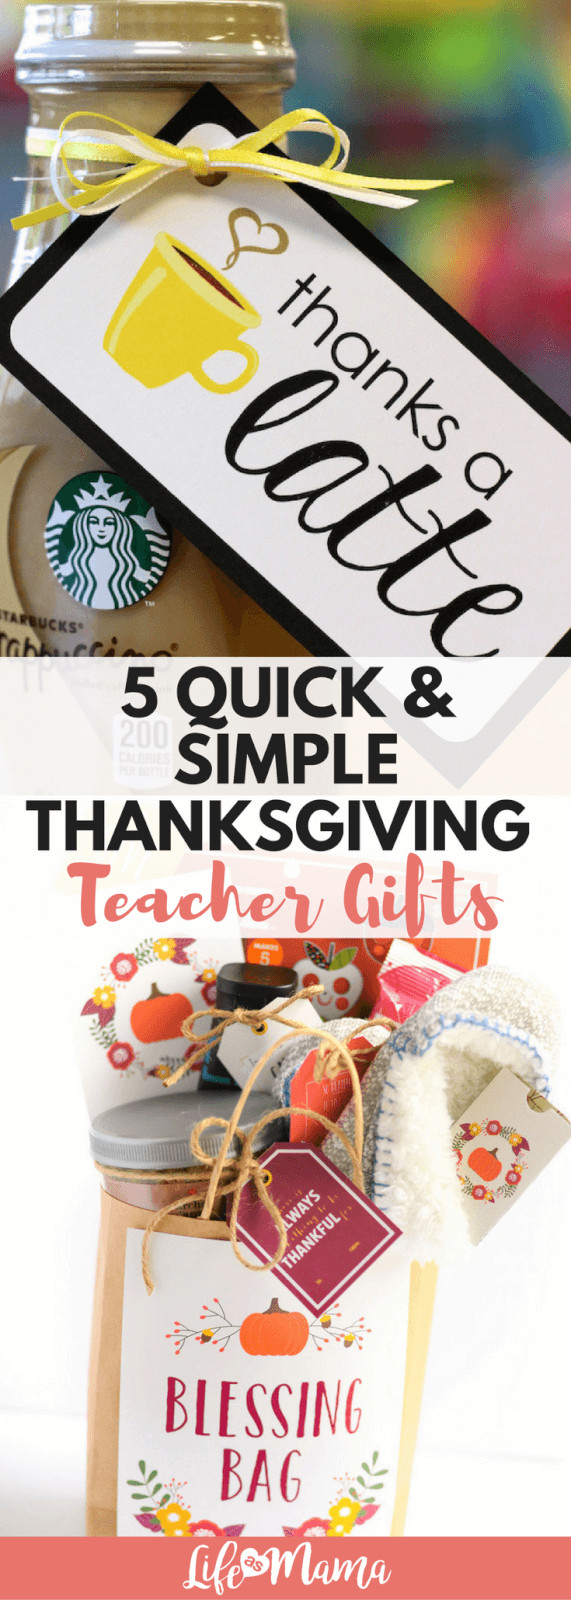 Creative Thanksgiving Gift Ideas
 5 Quick & Simple Thanksgiving Teacher Gifts